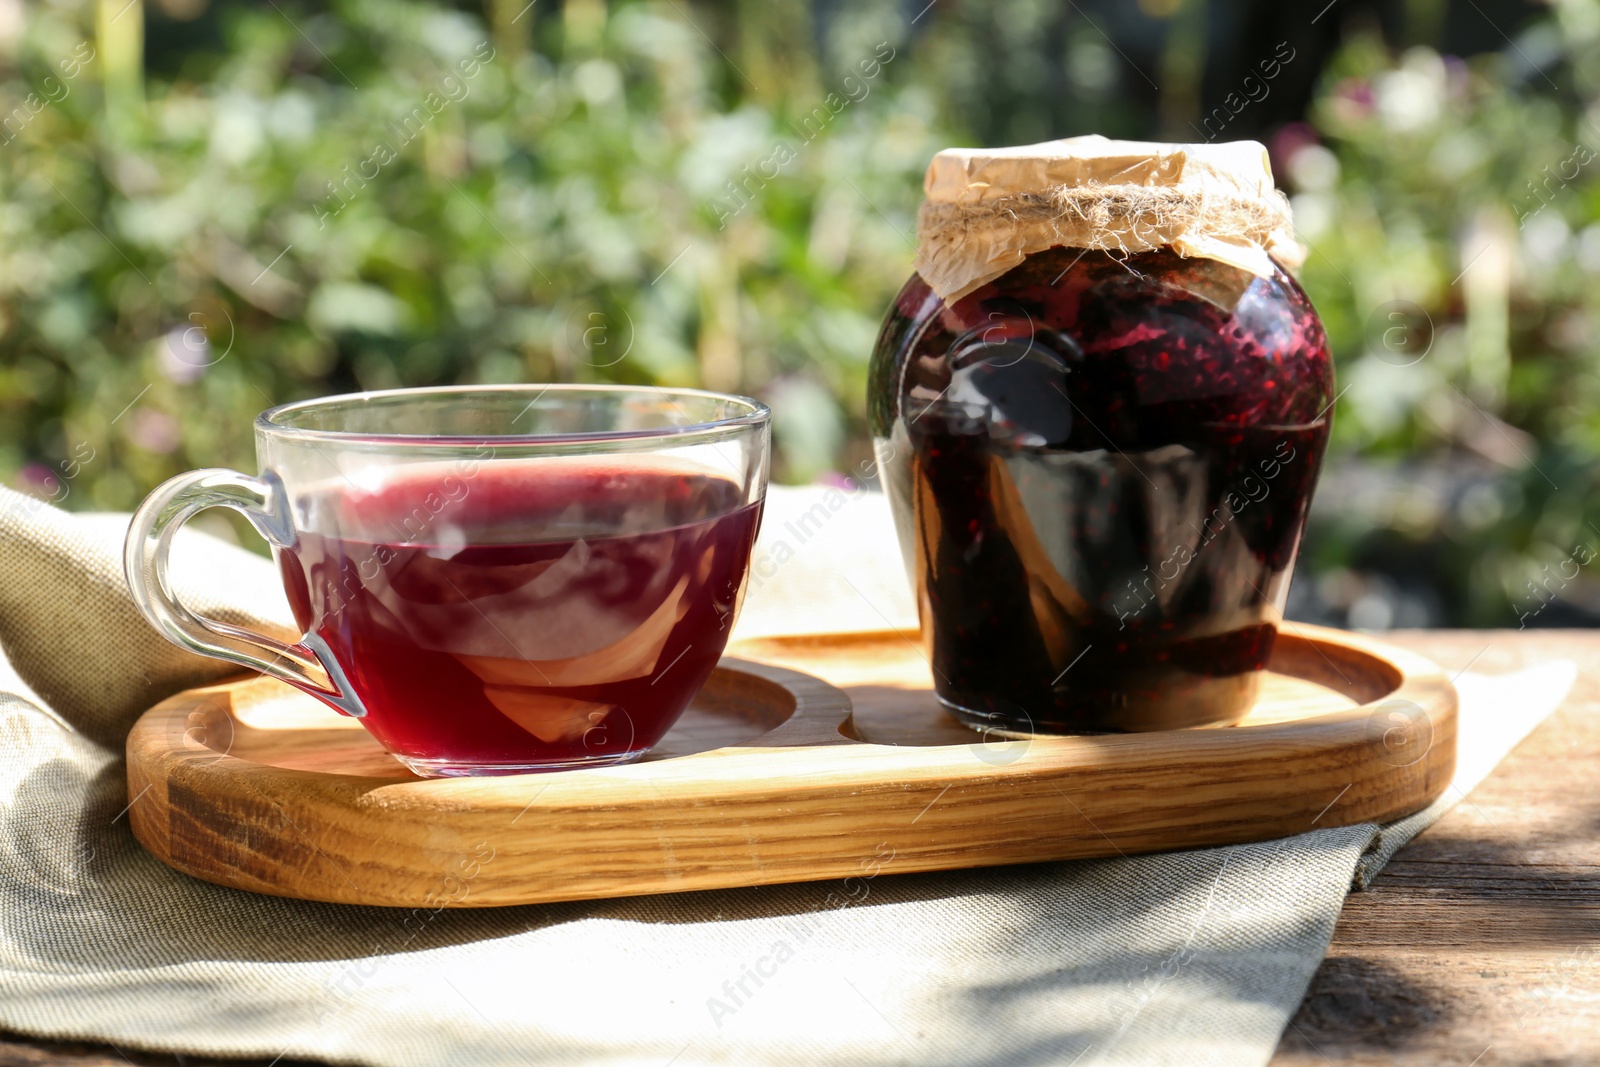 Photo of Elderberries (Sambucus) jam and glass cup of tea on table outdoors